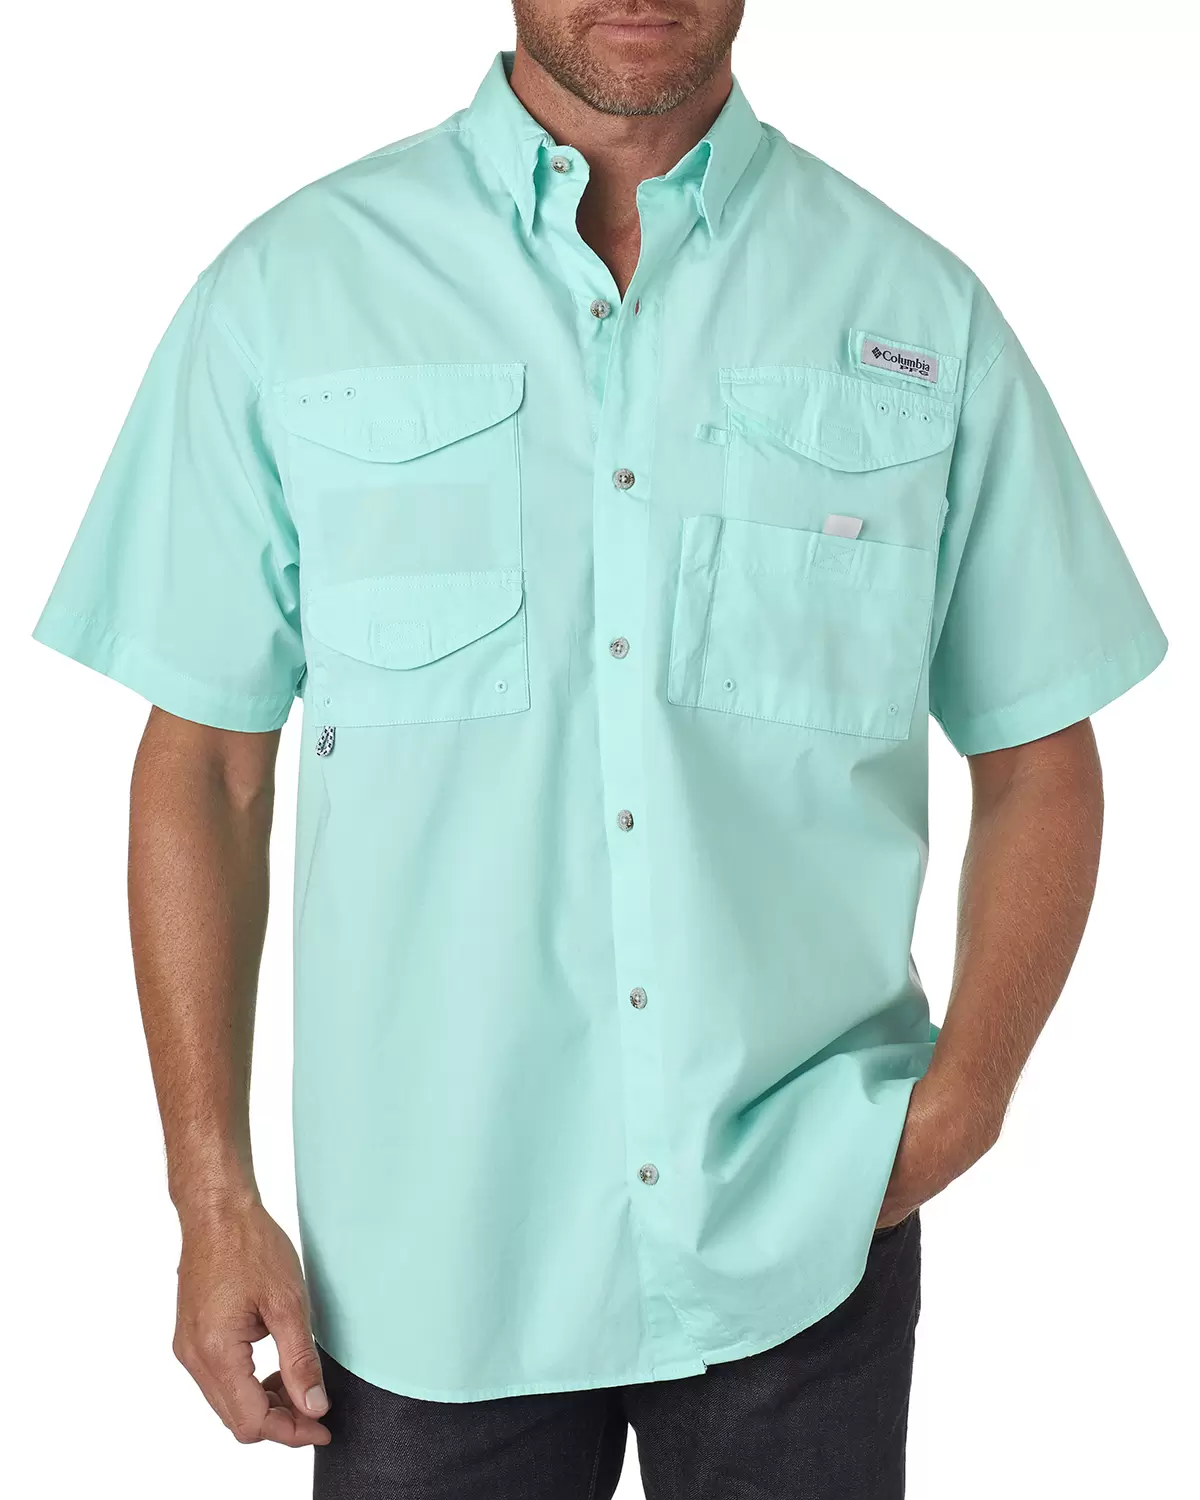 Columbia Men's PFG Fishing Shirt Size L Purple Short Sleeves Vented 